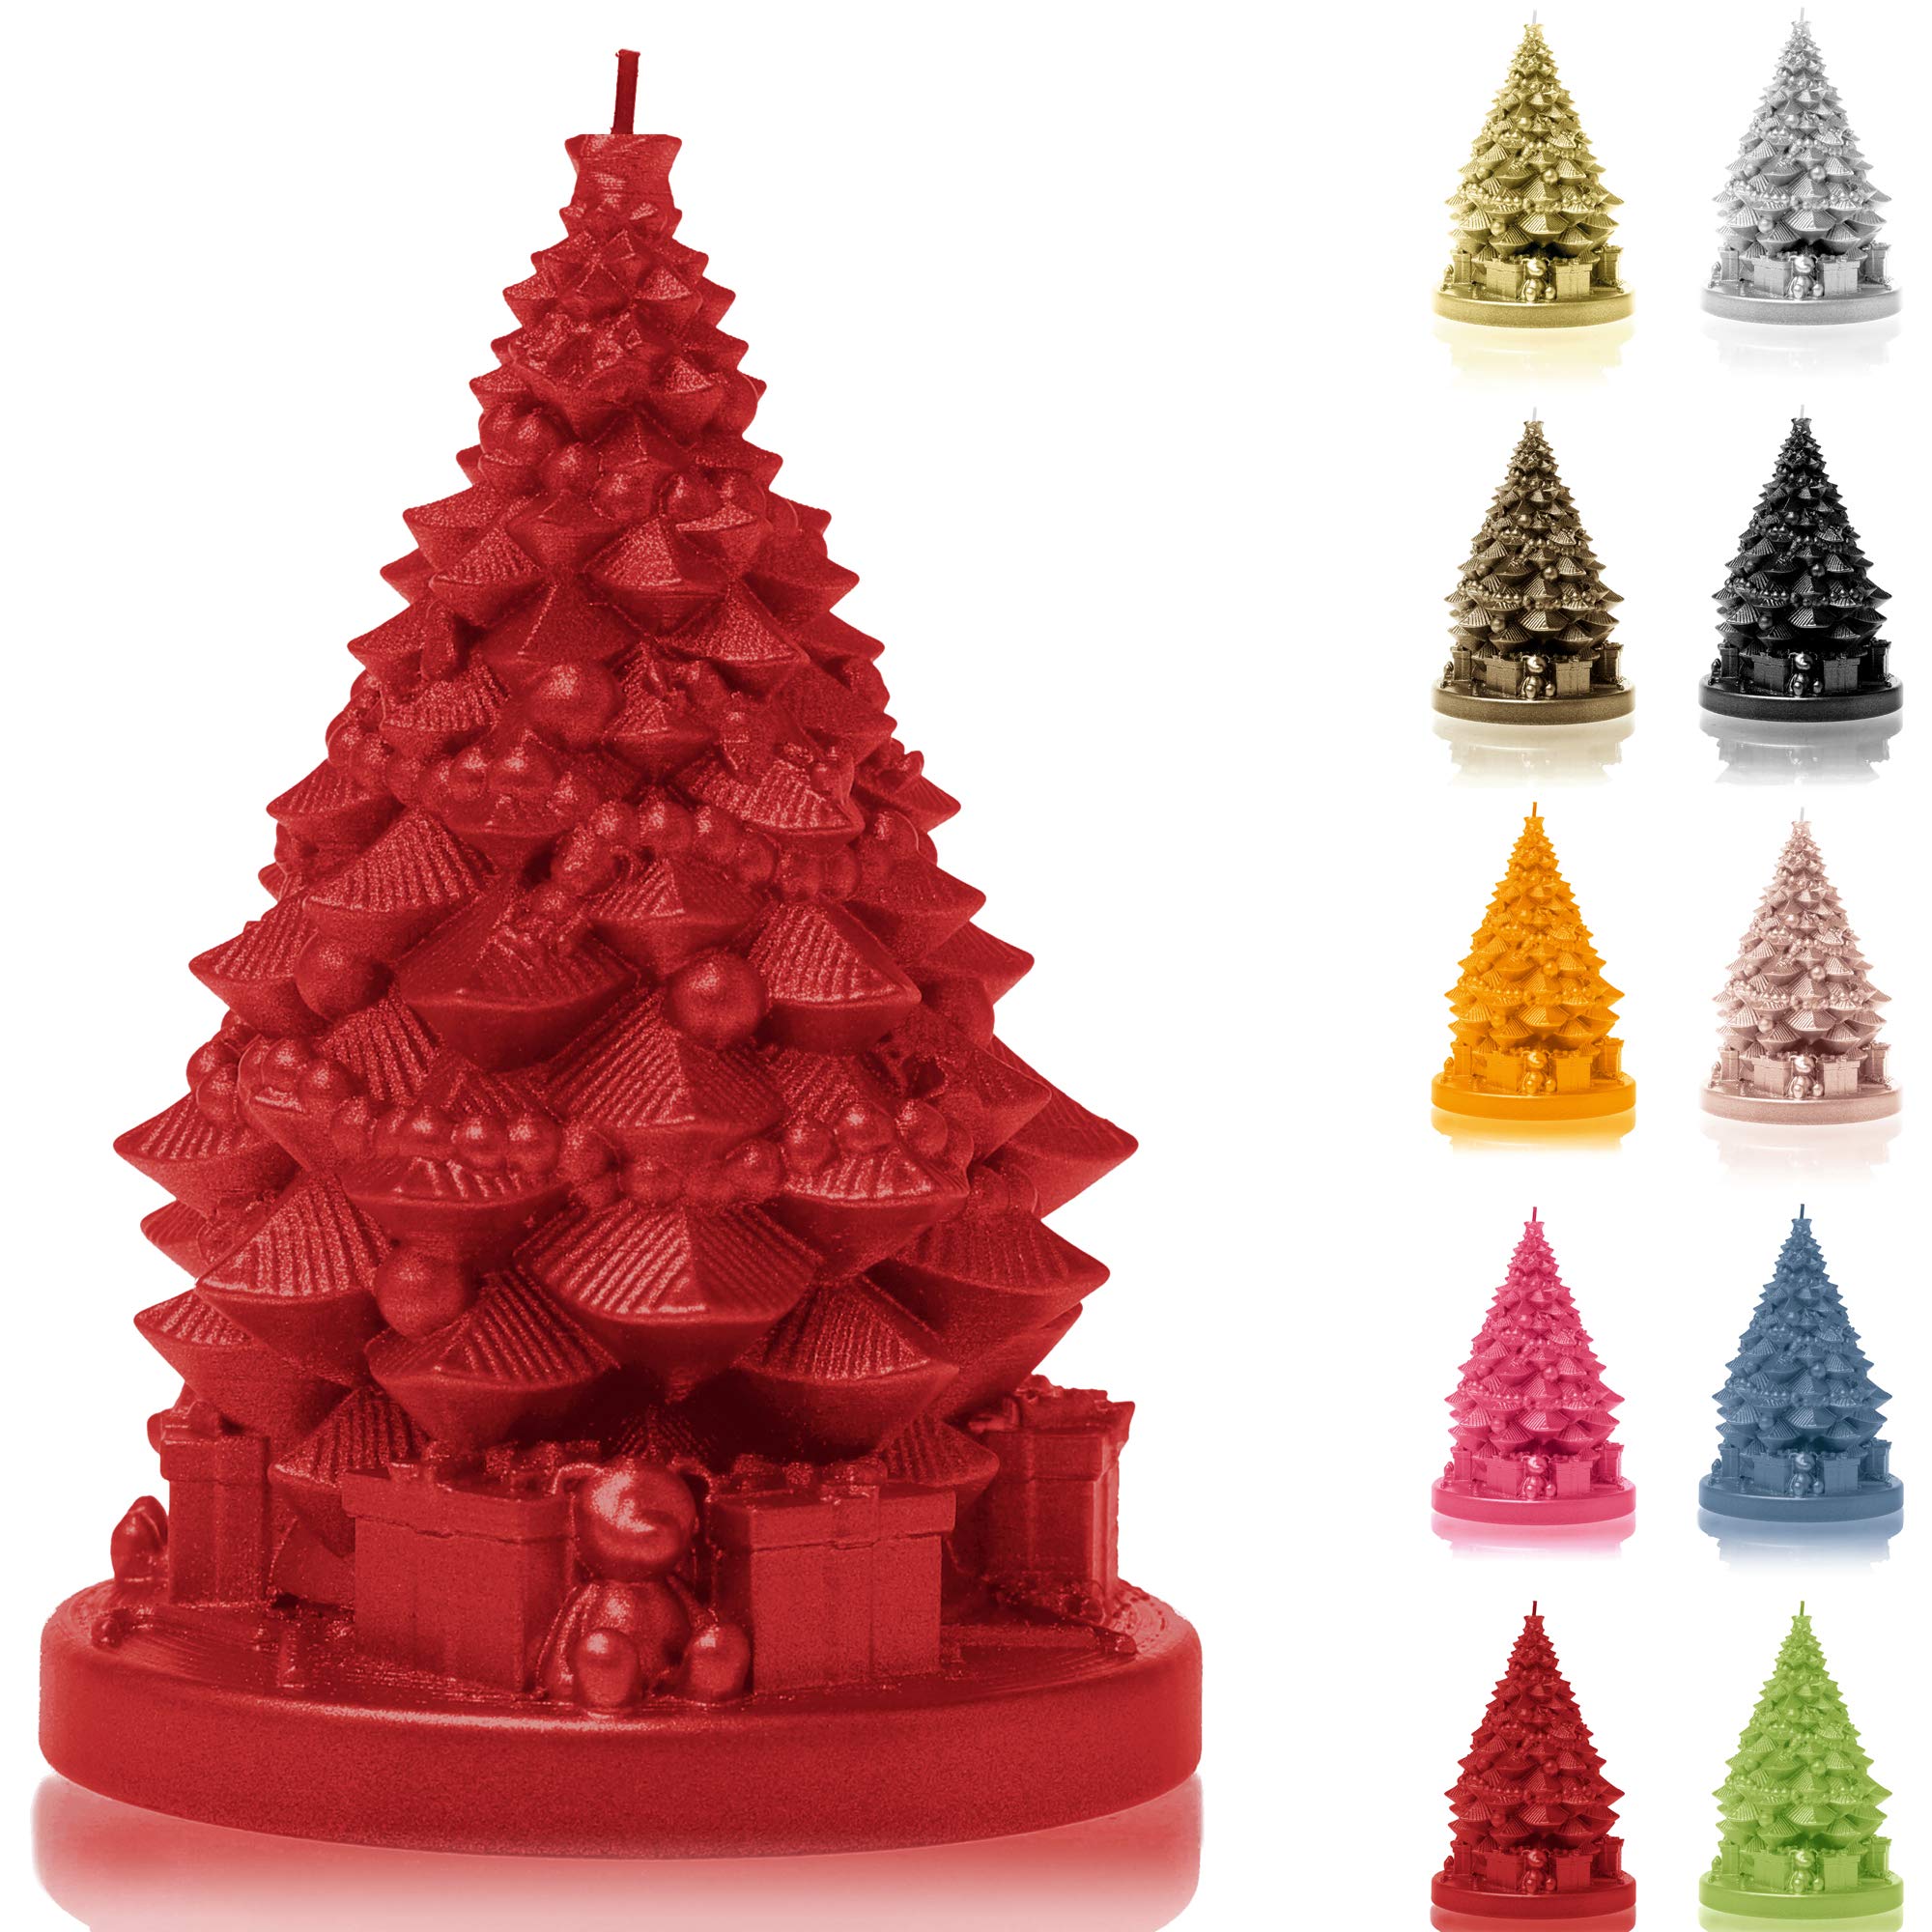 Candellana Christmass Tree with Gifts Kerze - Weihnachten Deko - Weihnachtsartikel - Deko Kerze - Weihnachtliche Kerzen - Weohnachtsgeschenk - Handgemachte Geschenke